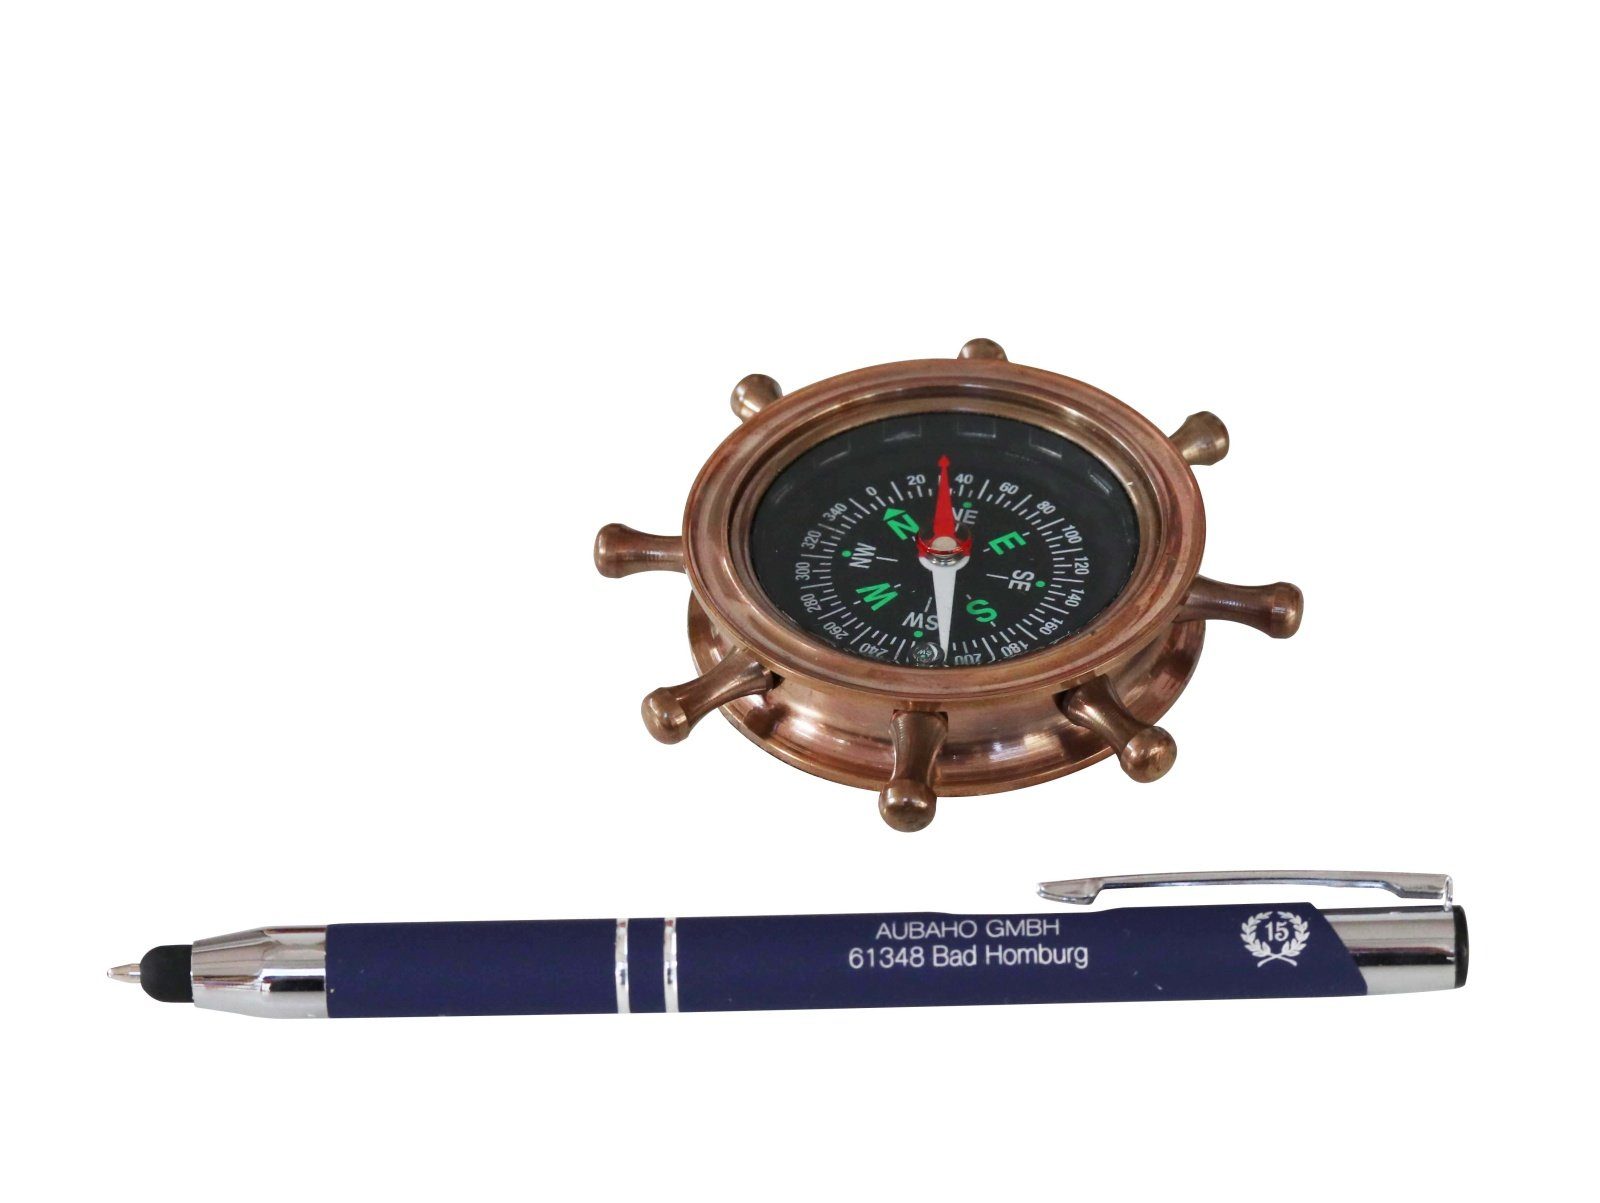 (c) Navigation Steuerrad Kompass Aubaho Kompass Maritim Antik-Stil Dekoration